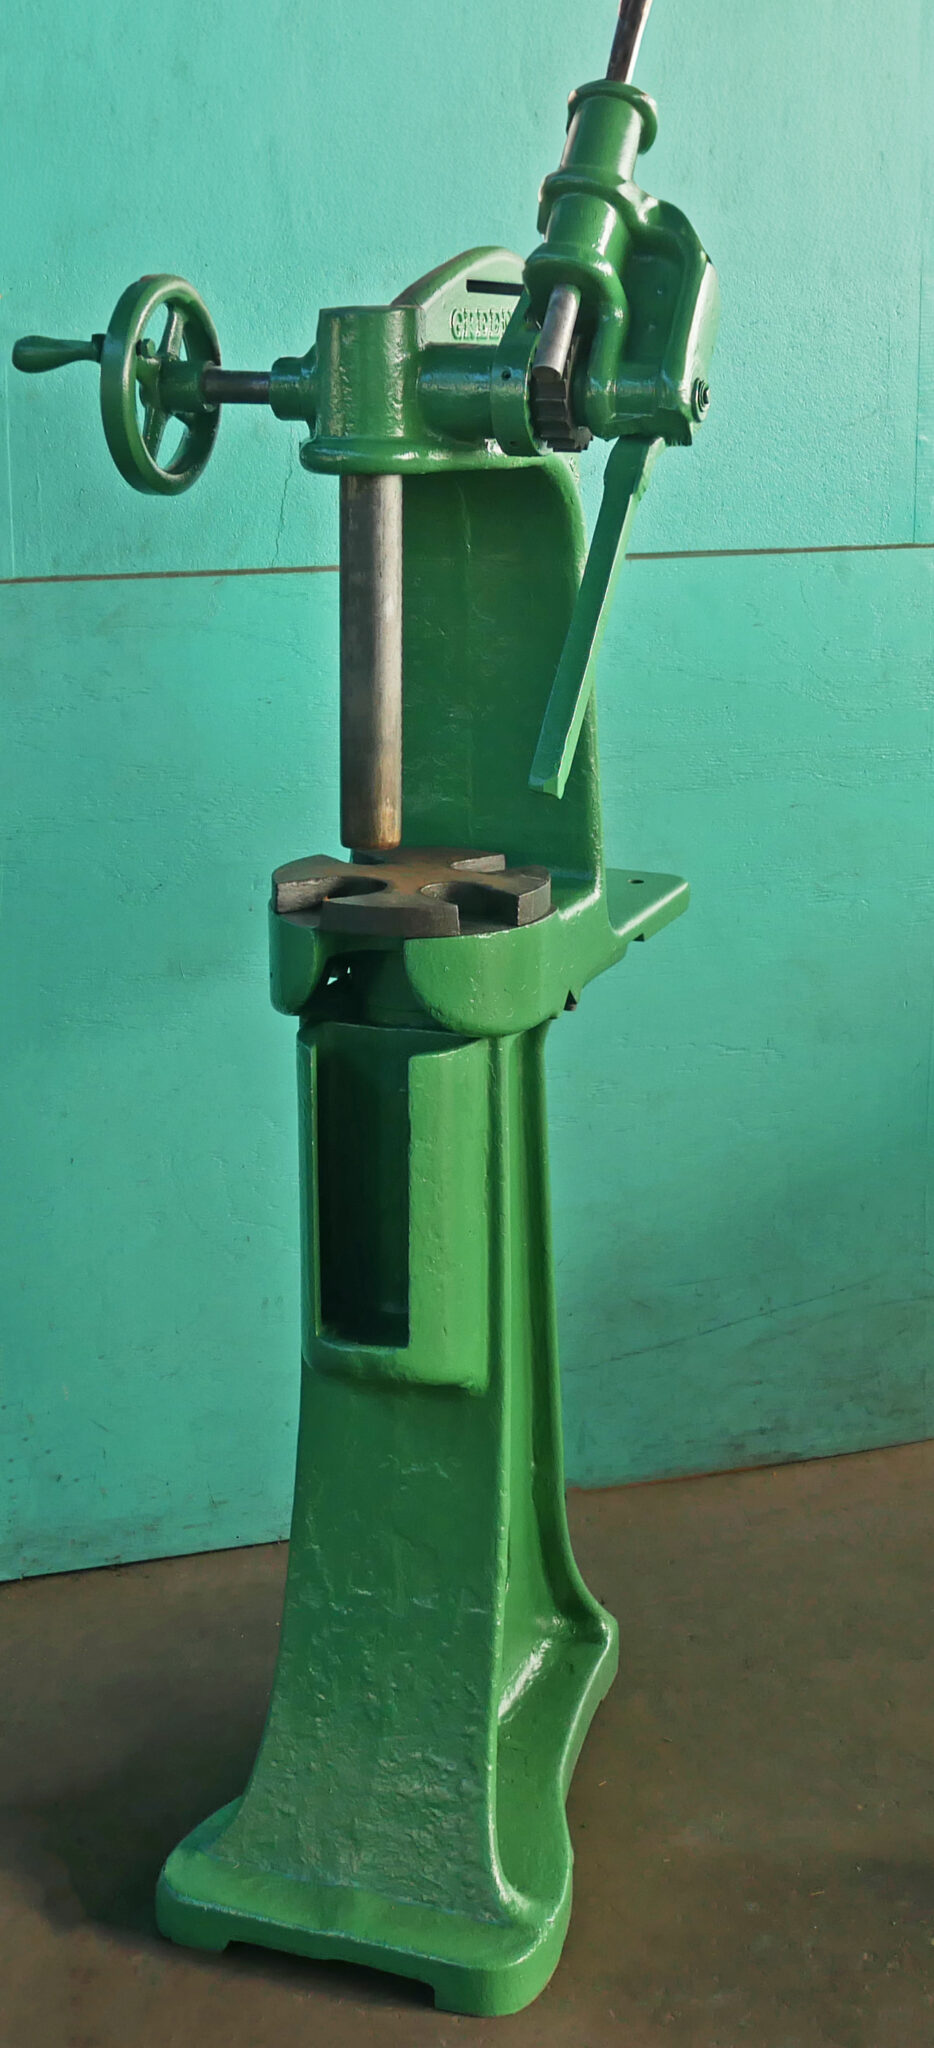 Greenerd 5 Ton Ratchet Arbor Press, No. 3 1/2 - Norman Machine Tool